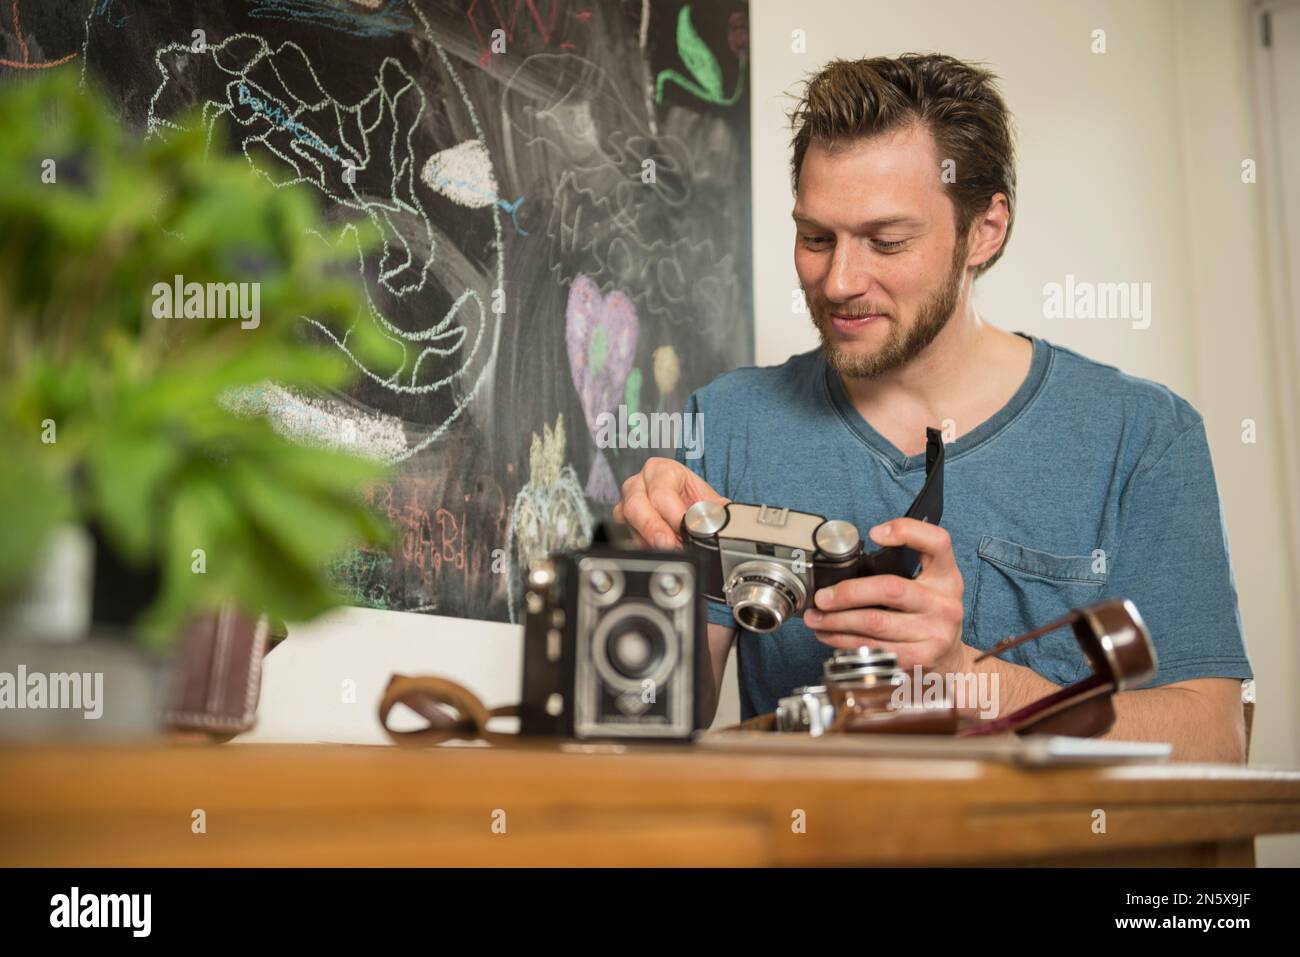 Man repairing antique camera in dining room, Munich, Bavaria, Germany Stock Photo